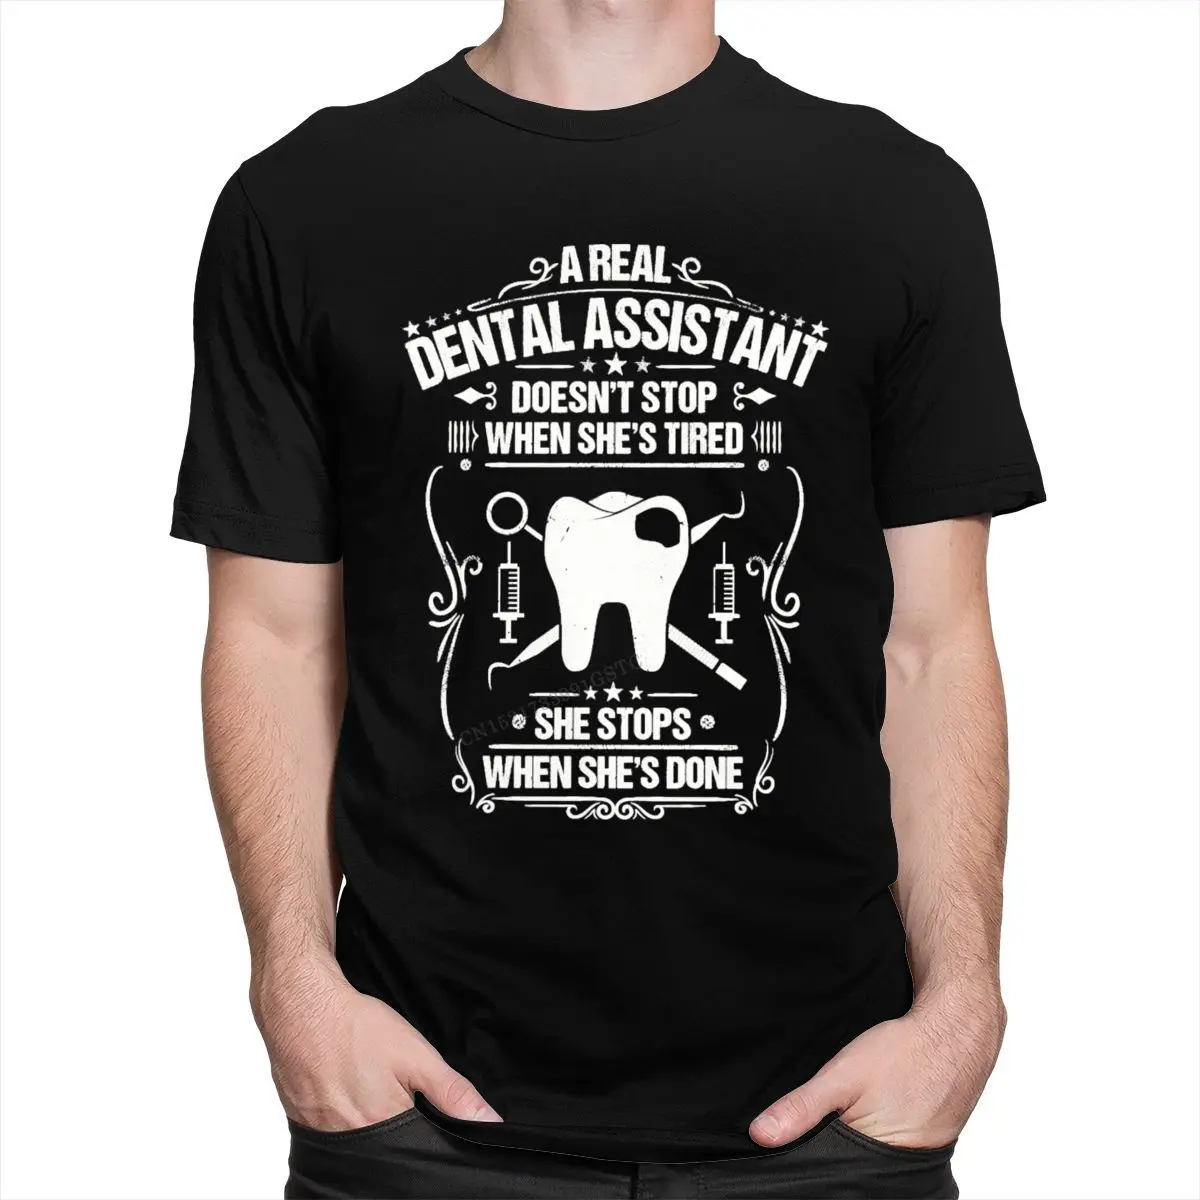 

Dental Assistant T Shirt Men Camisas Hombre Dentist T-Shirt Dentistry Hygienist Tshirts Premium Cotton Slim Fit Tee Tops